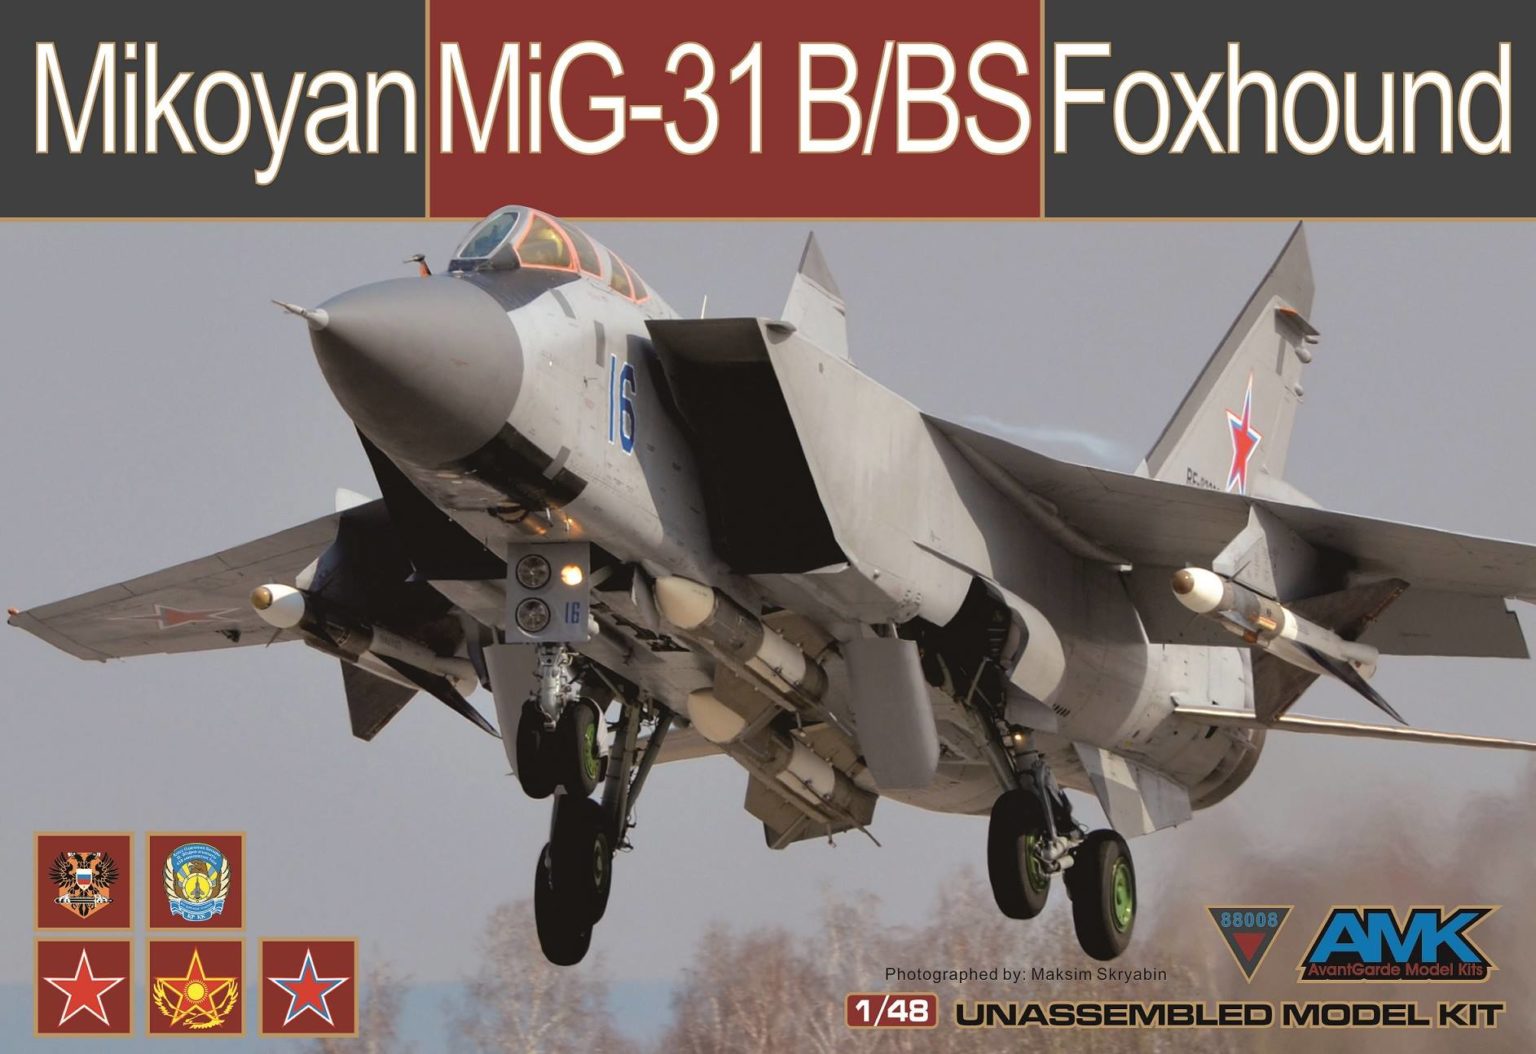 88008 Самолет  Mikoyan Mig-31 B/BS Foxhound